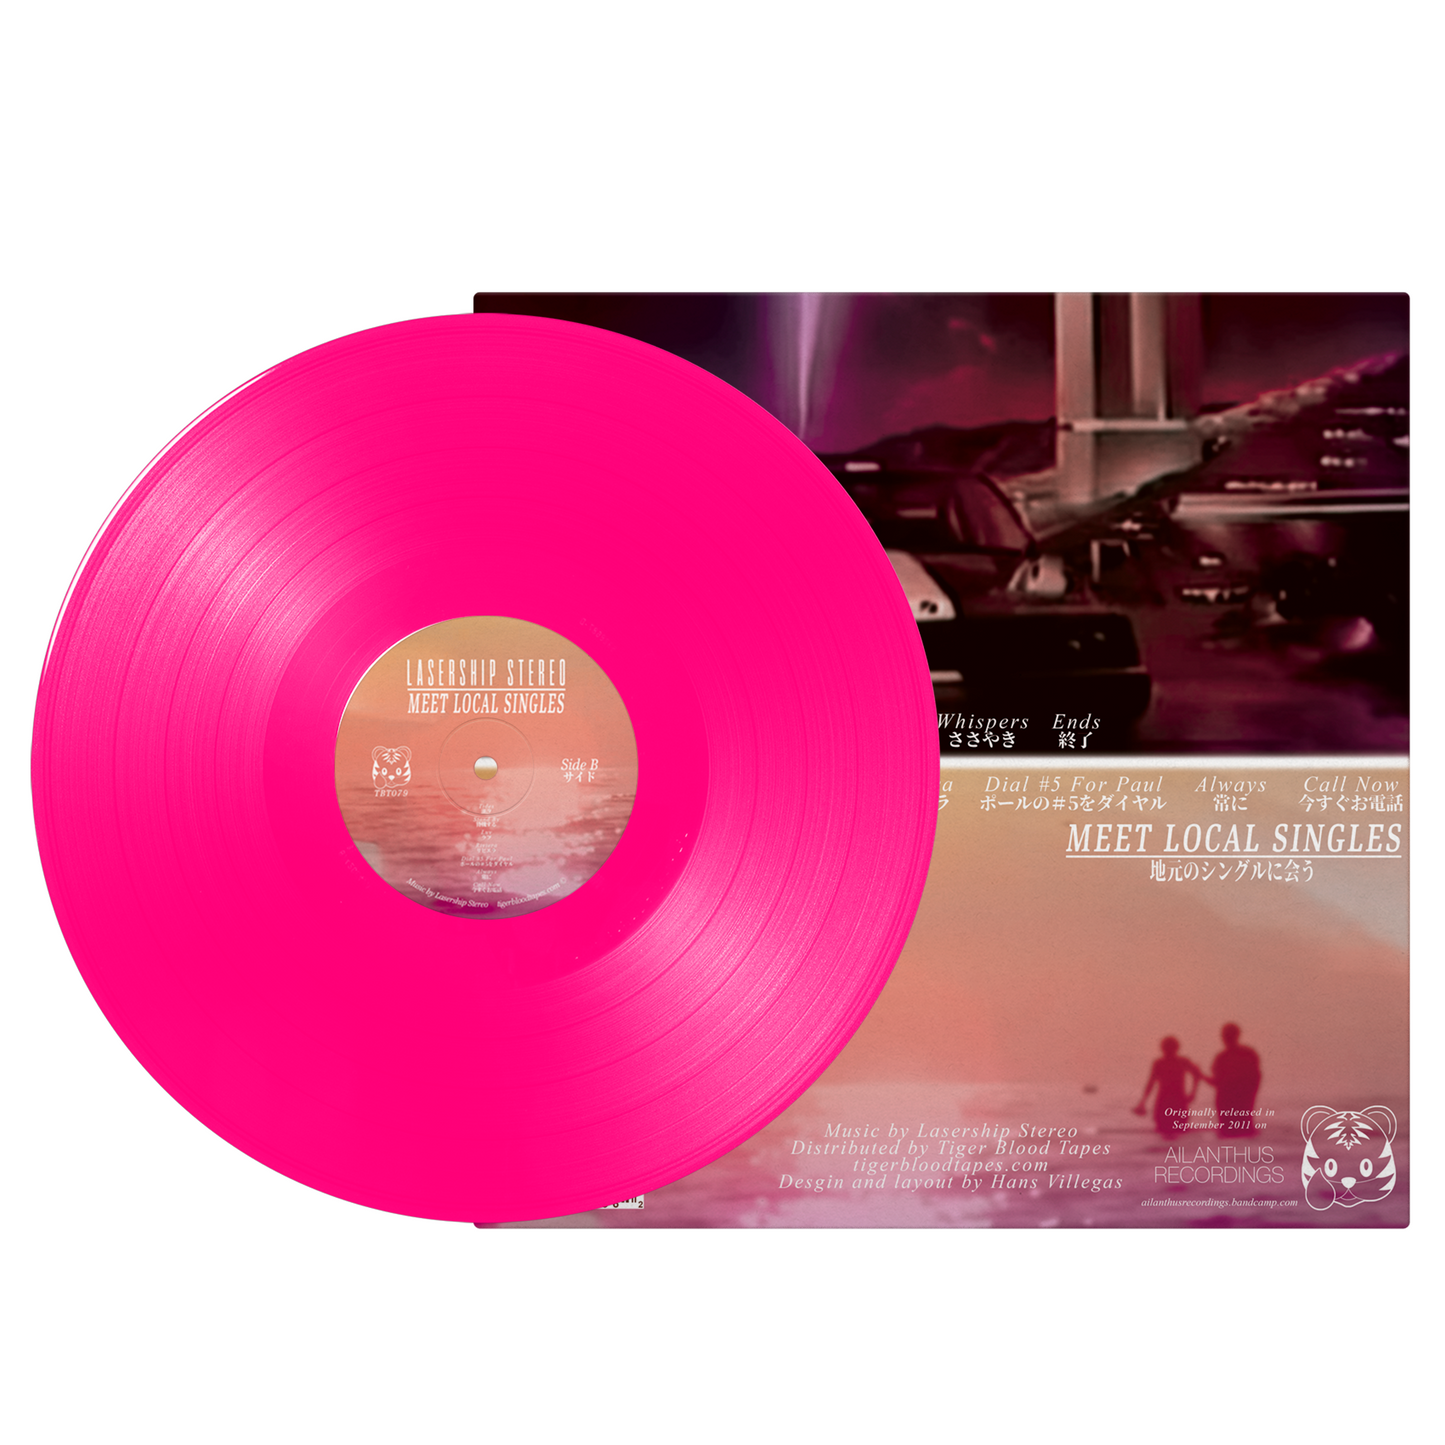 Lasership Stereo - "Soft Season & Meet Local Singles" Limited Edition Hot Pink 12" Vinyl LP